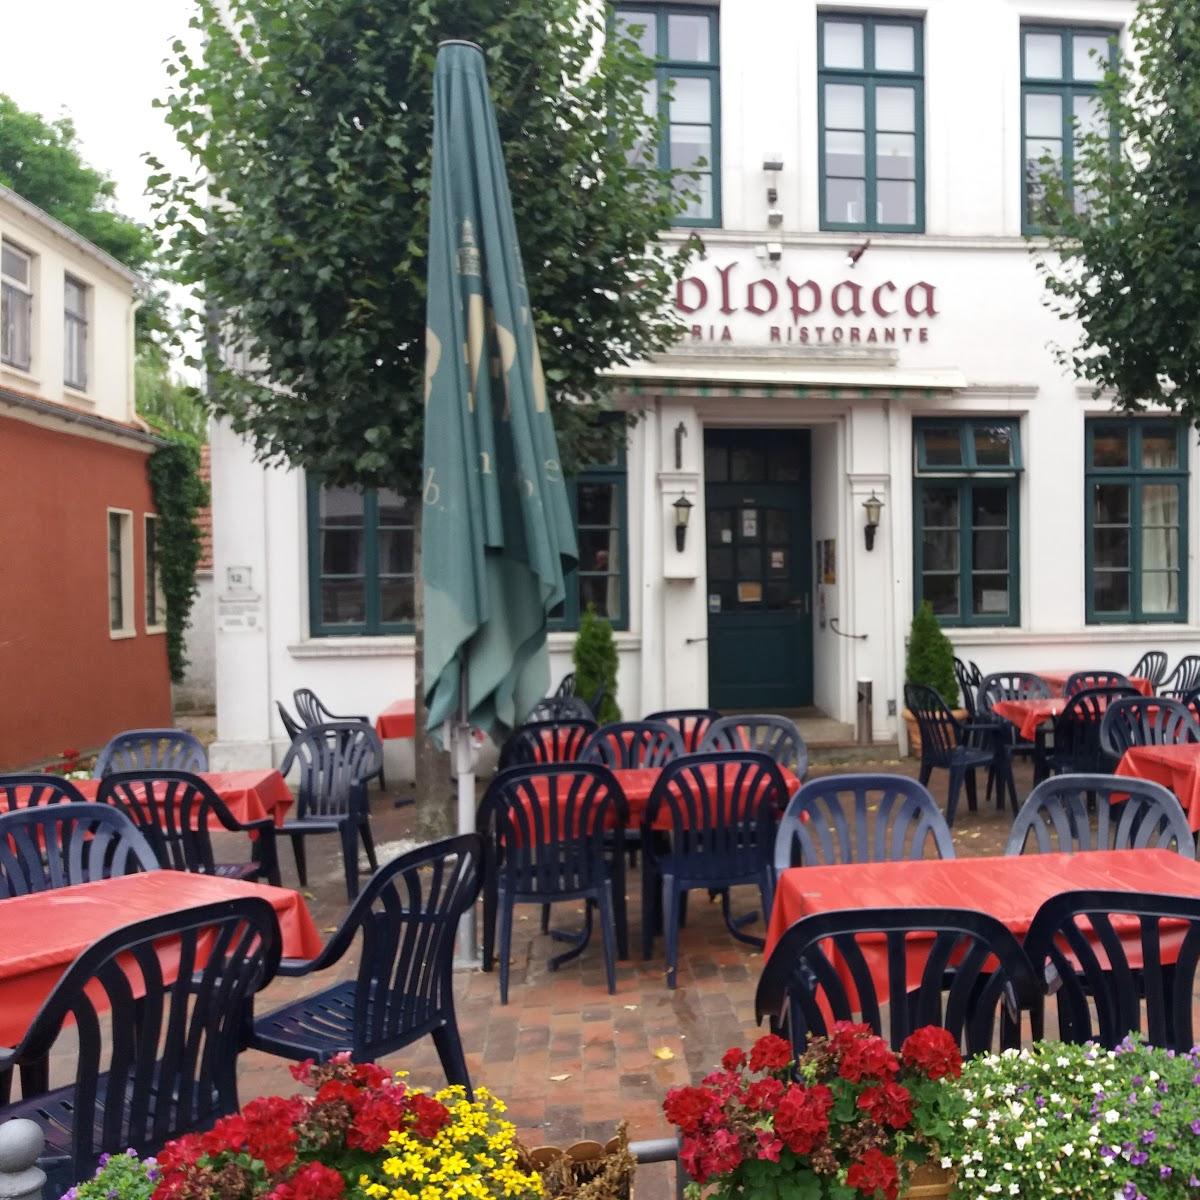 Restaurant "Ristorante Solopaca" in  Jever